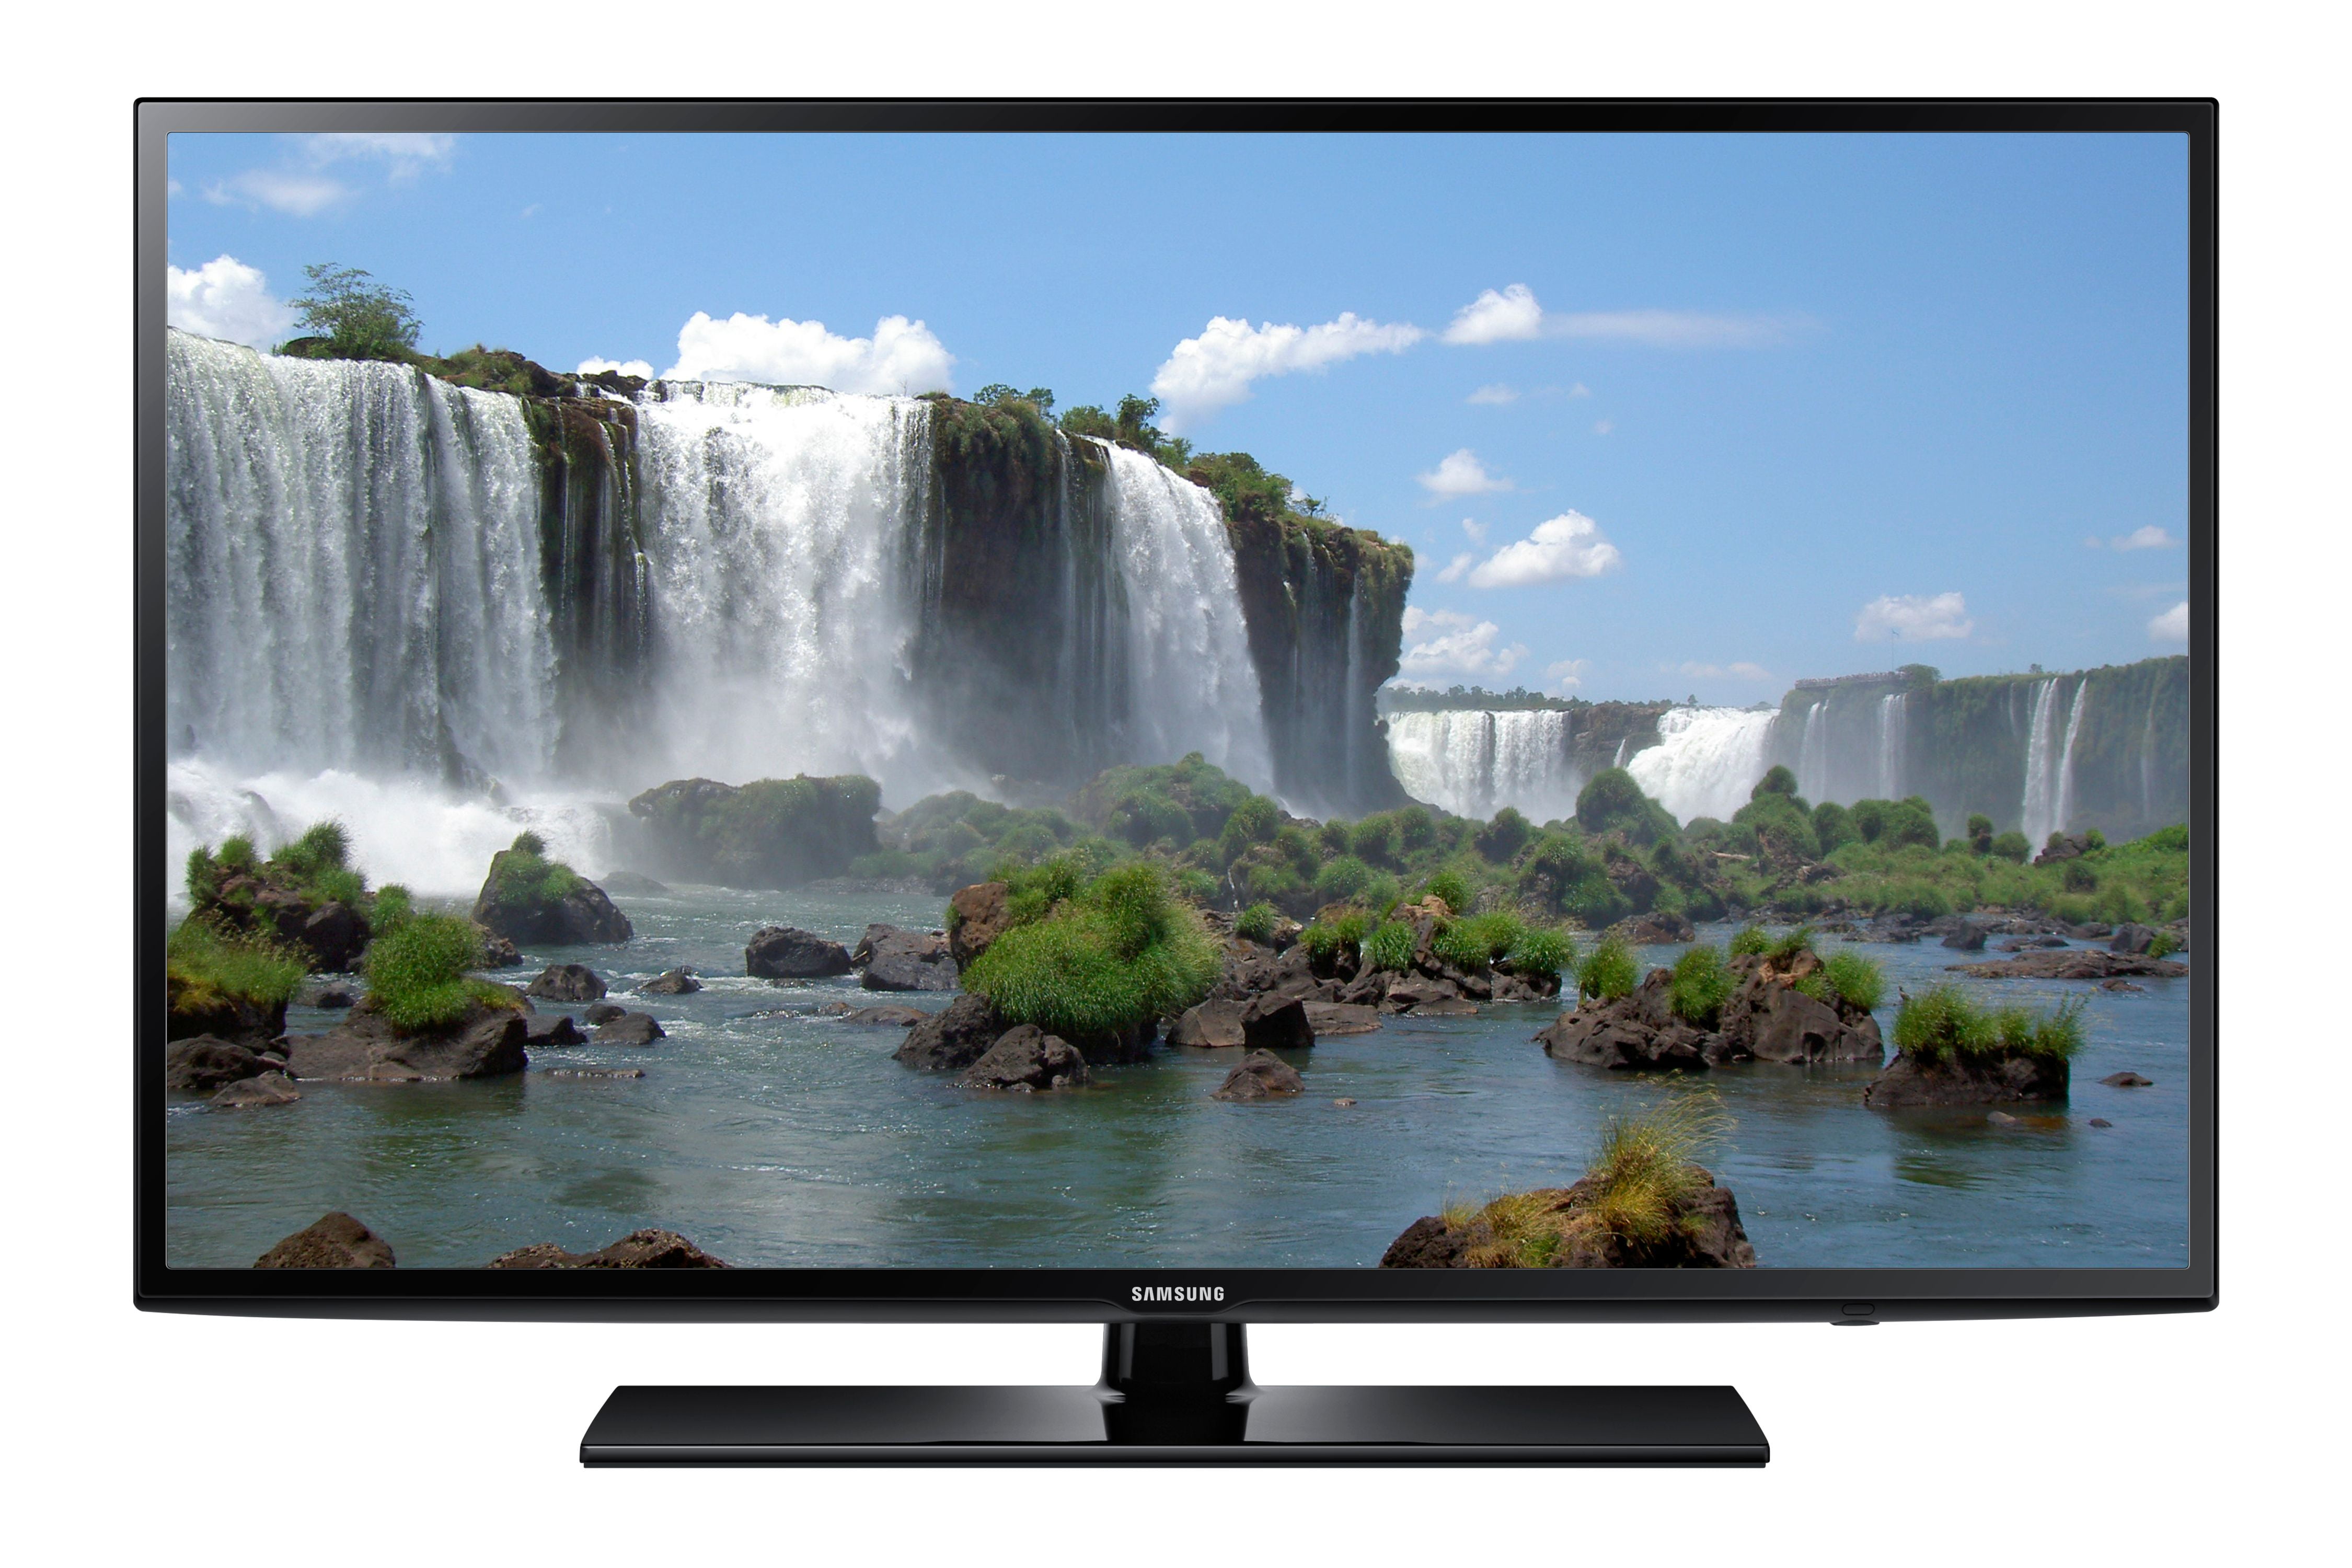 SAMSUNG Class FHD (1080P) Smart LED TV (UN55J6201AFXZA) Walmart.com